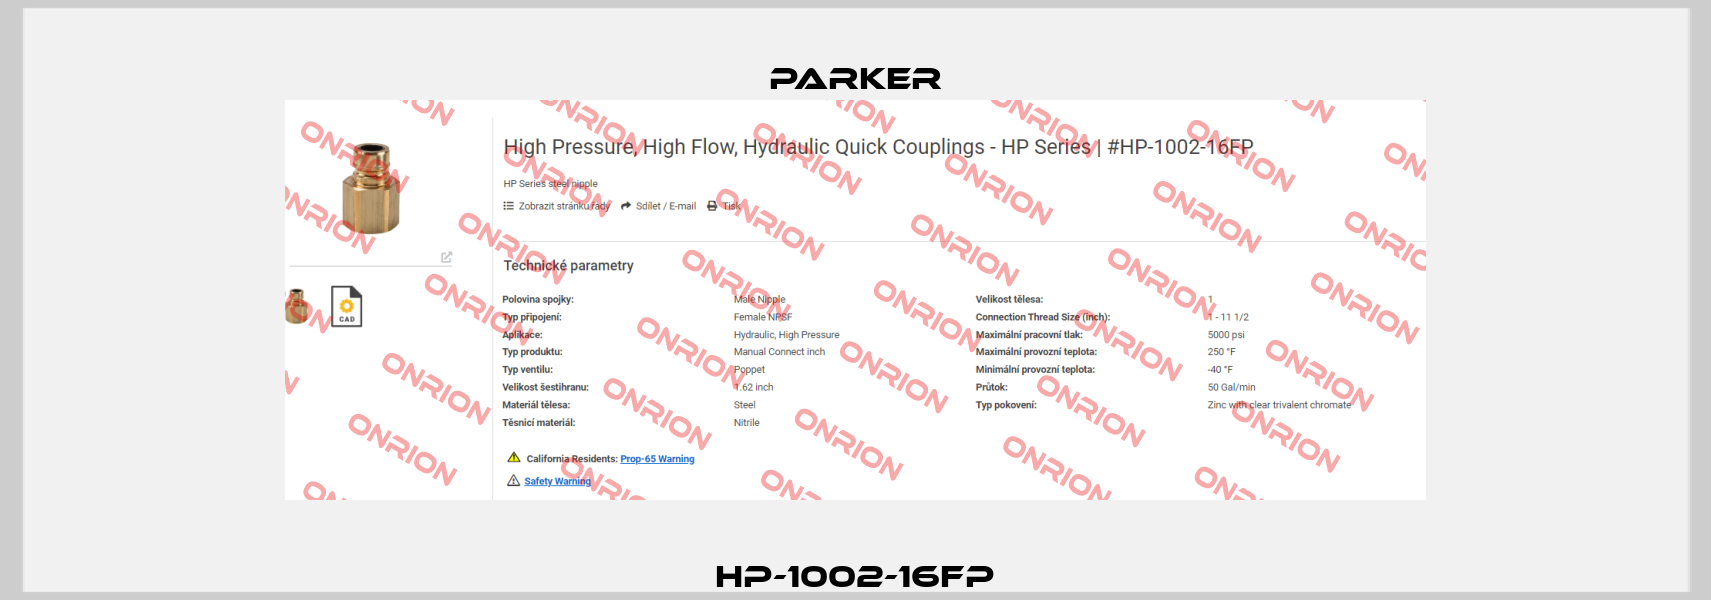 HP-1002-16FP Parker